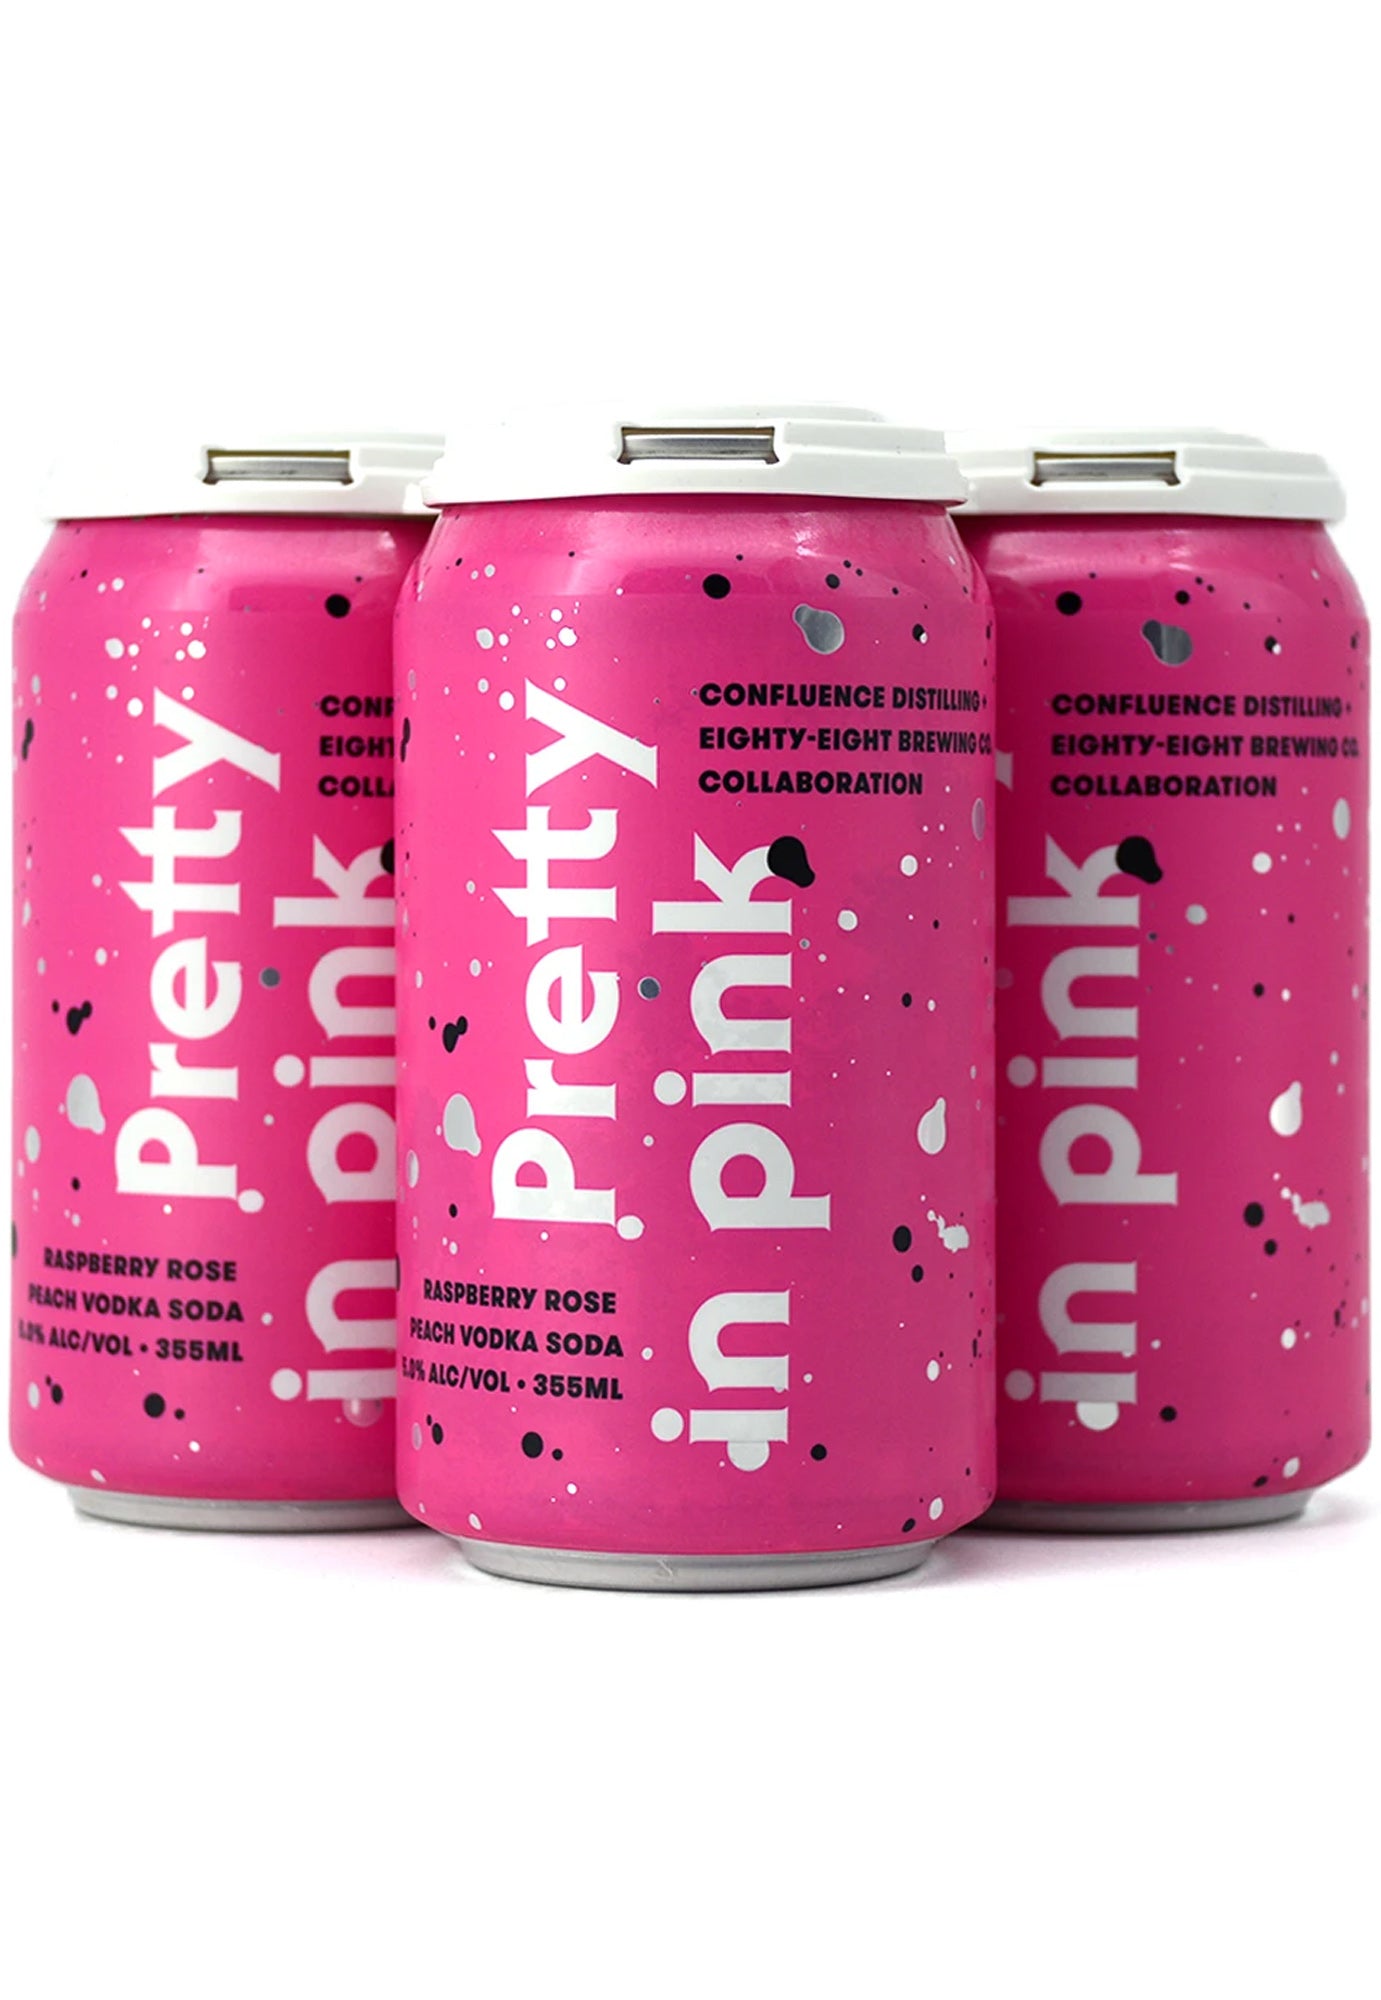 Eighty-Eight Pretty In Pink Vodka Soda 355 ml - 4 Cans